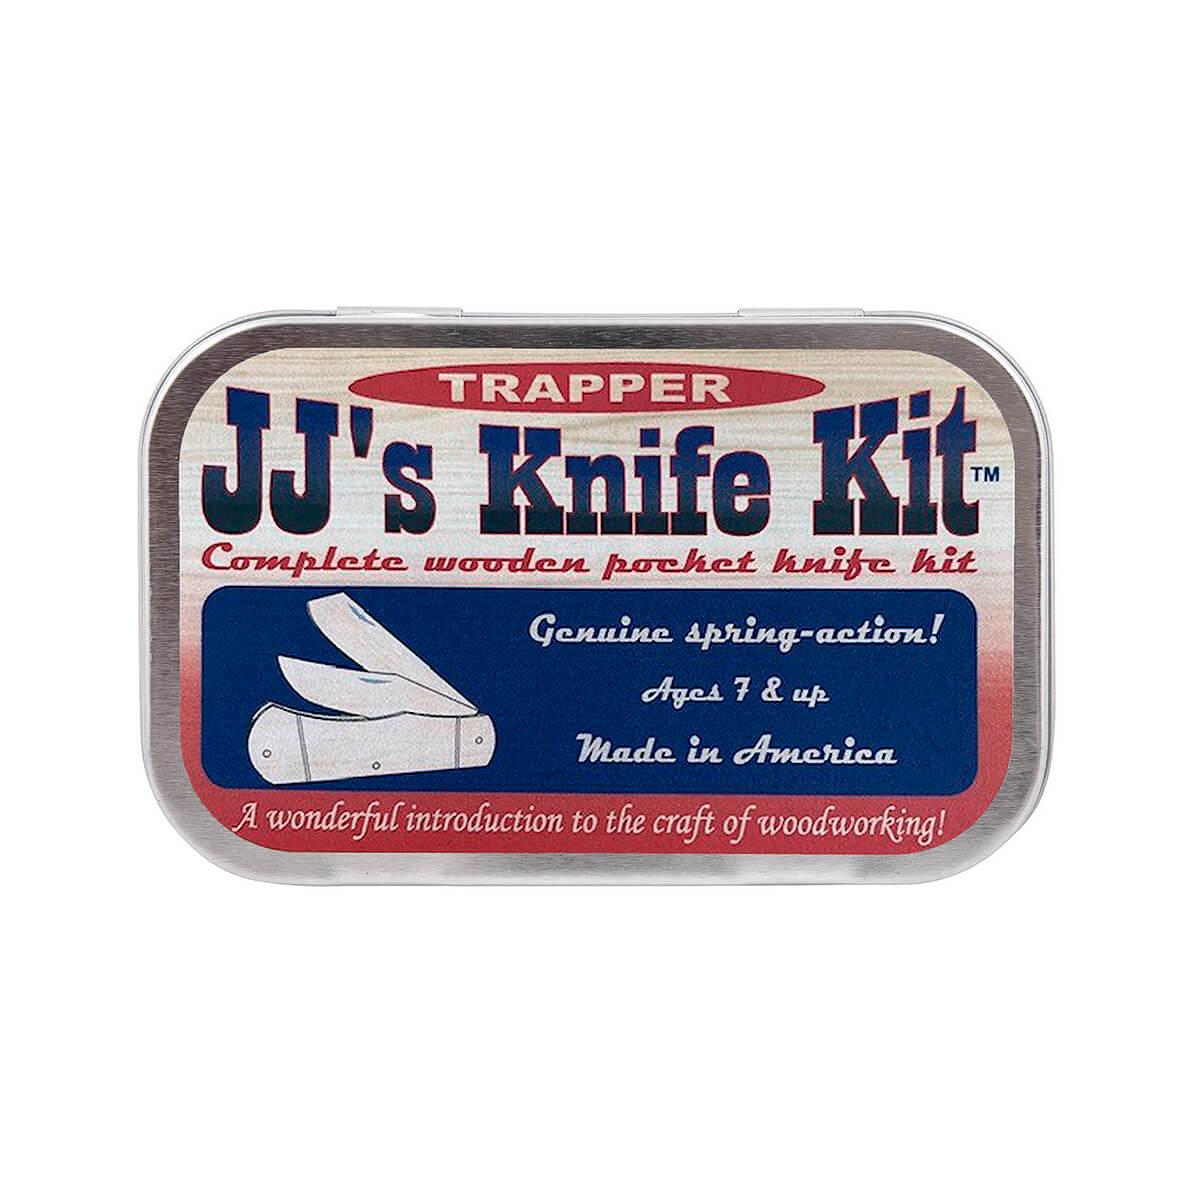  Wooden Trapper Knife Kit